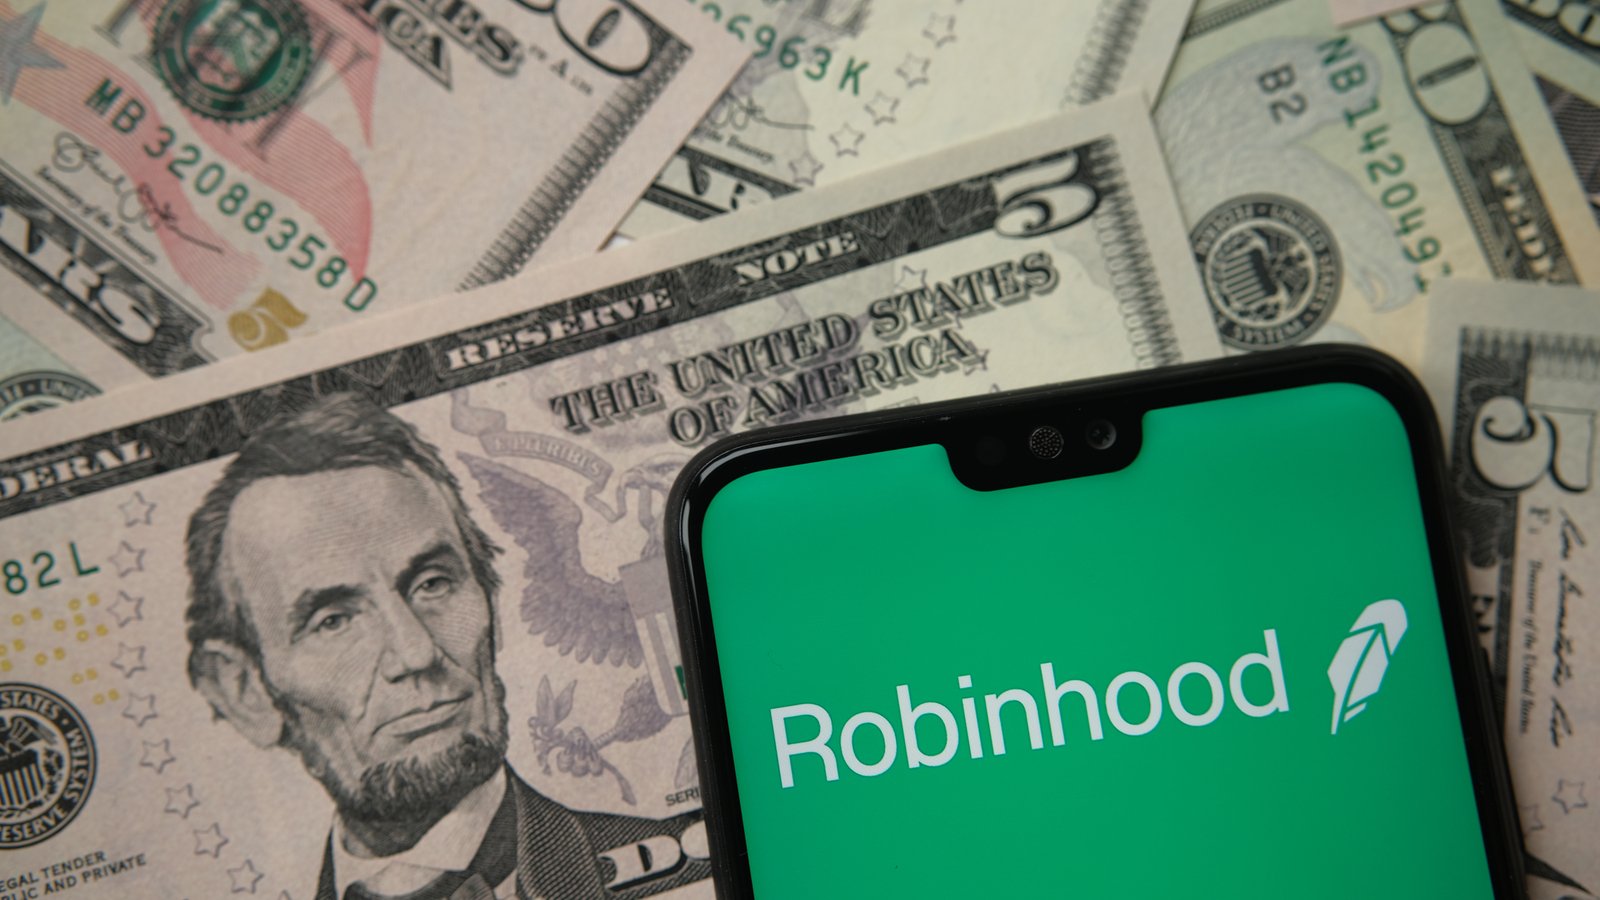 Robinhood app logo seen on smartphone on US dollar banknotes representing hood stock.